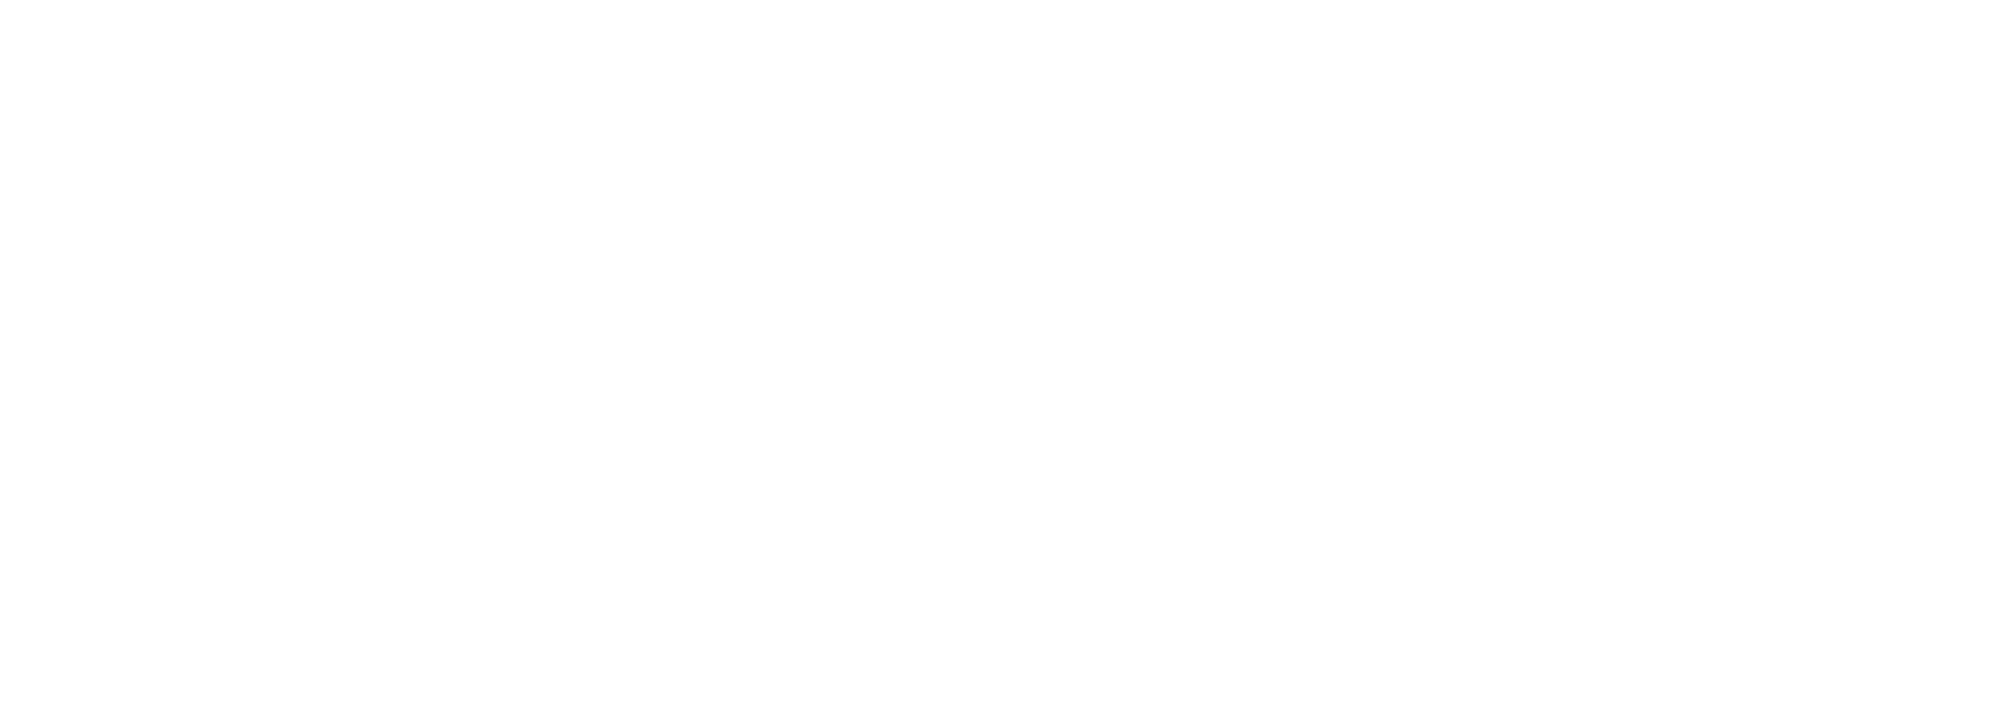 Ed Partners